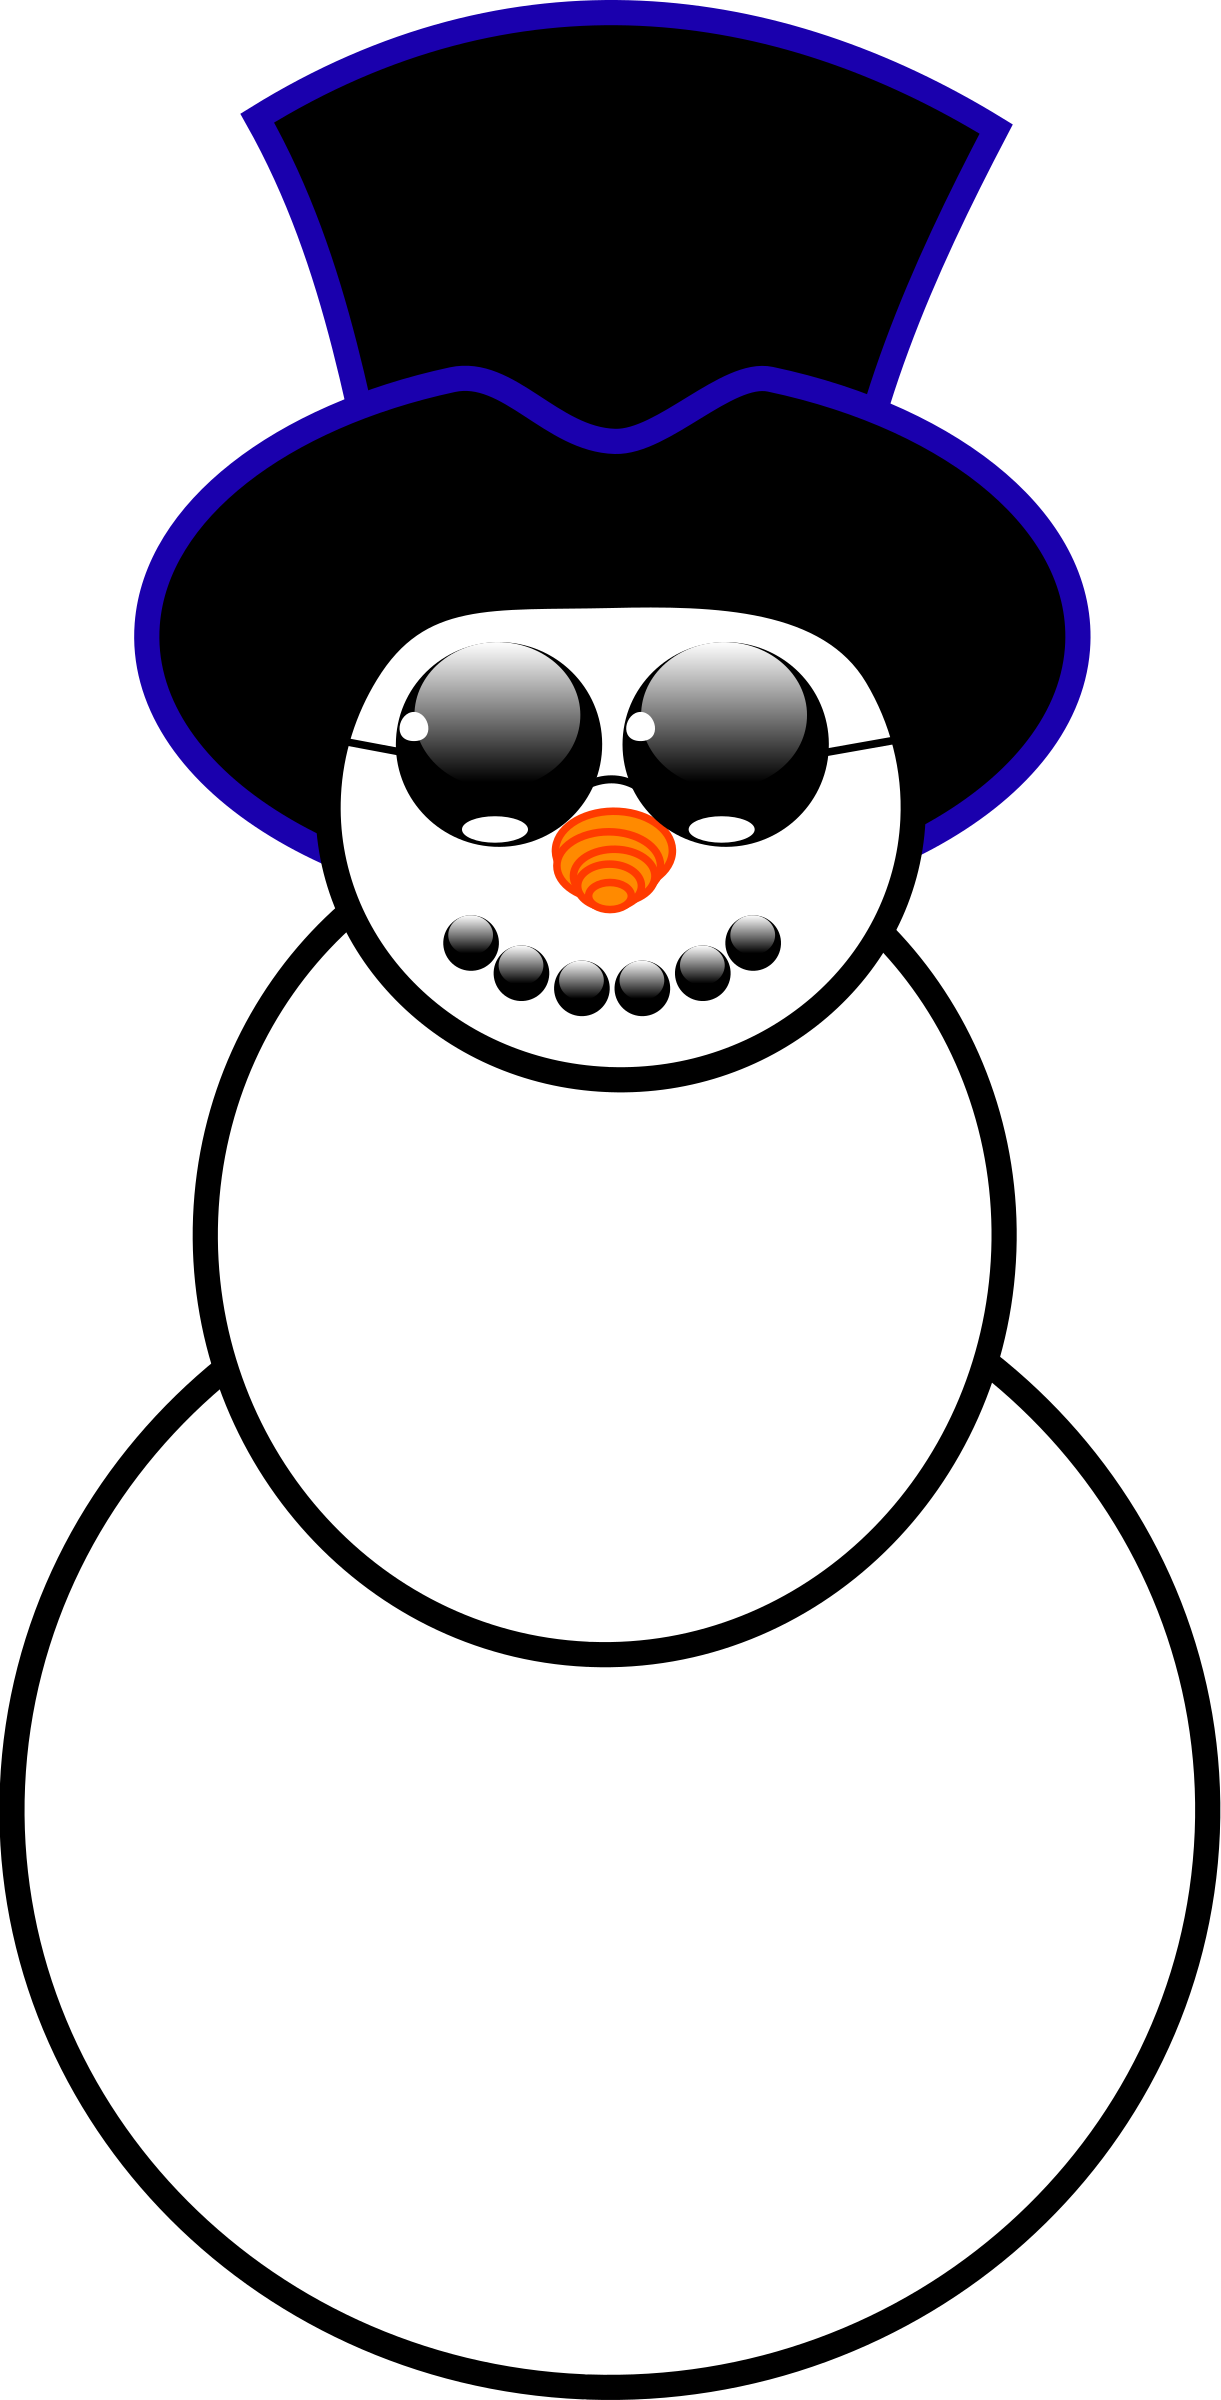 free vector snowman clipart - photo #13